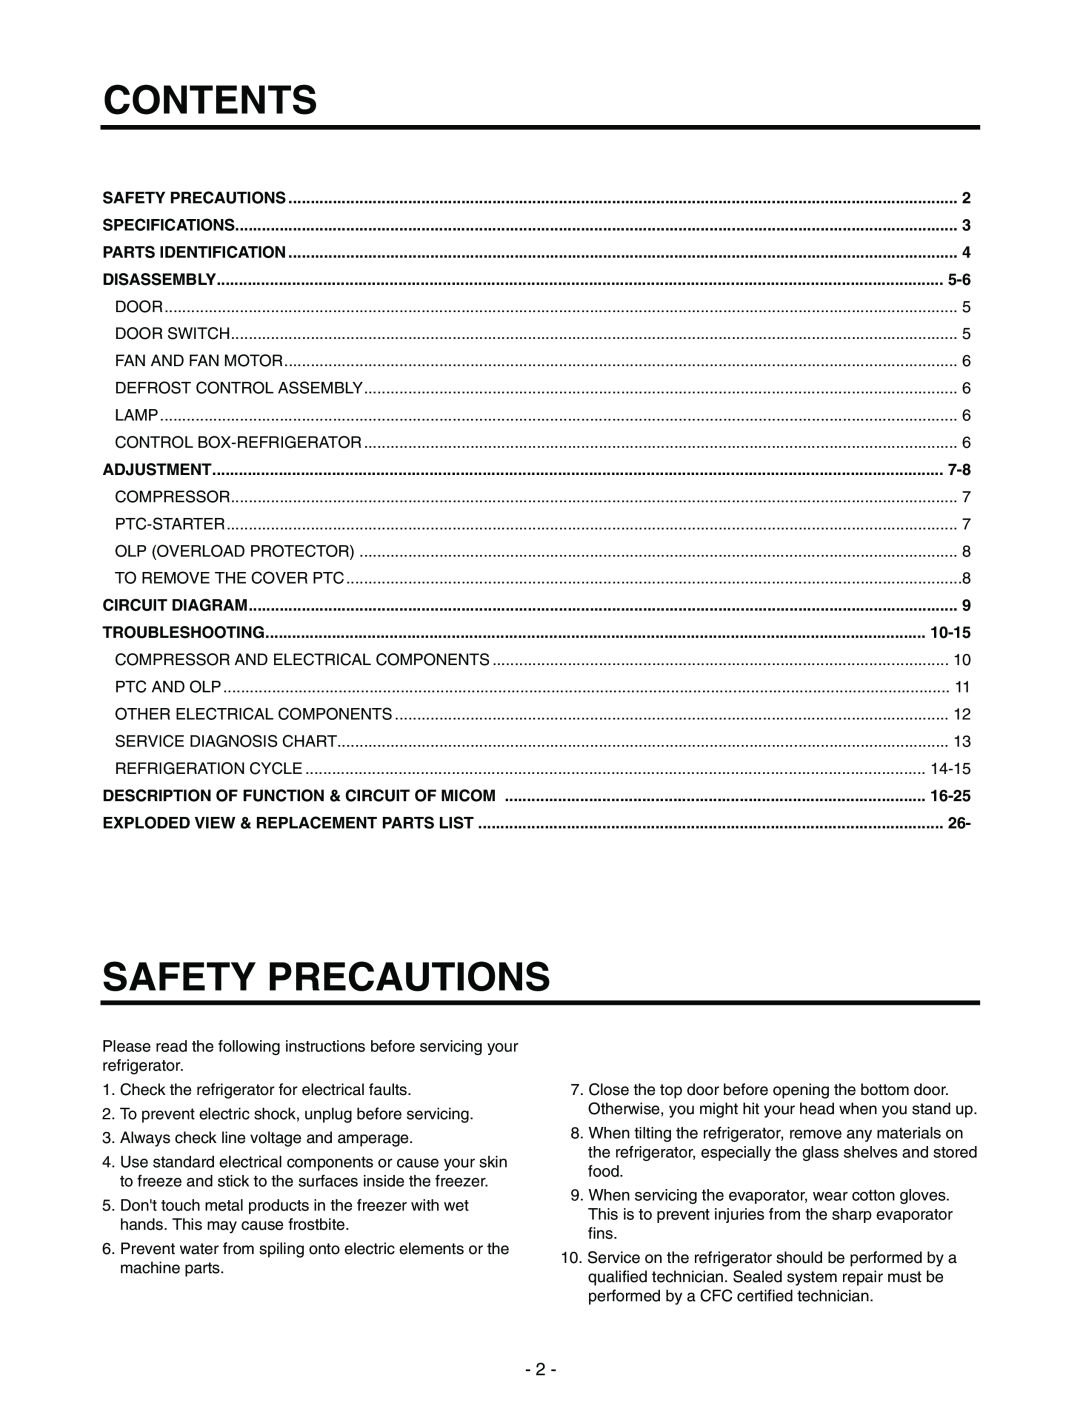 LG Electronics LRTN22310, LRTN19310 service manual Contents, Safety Precautions 